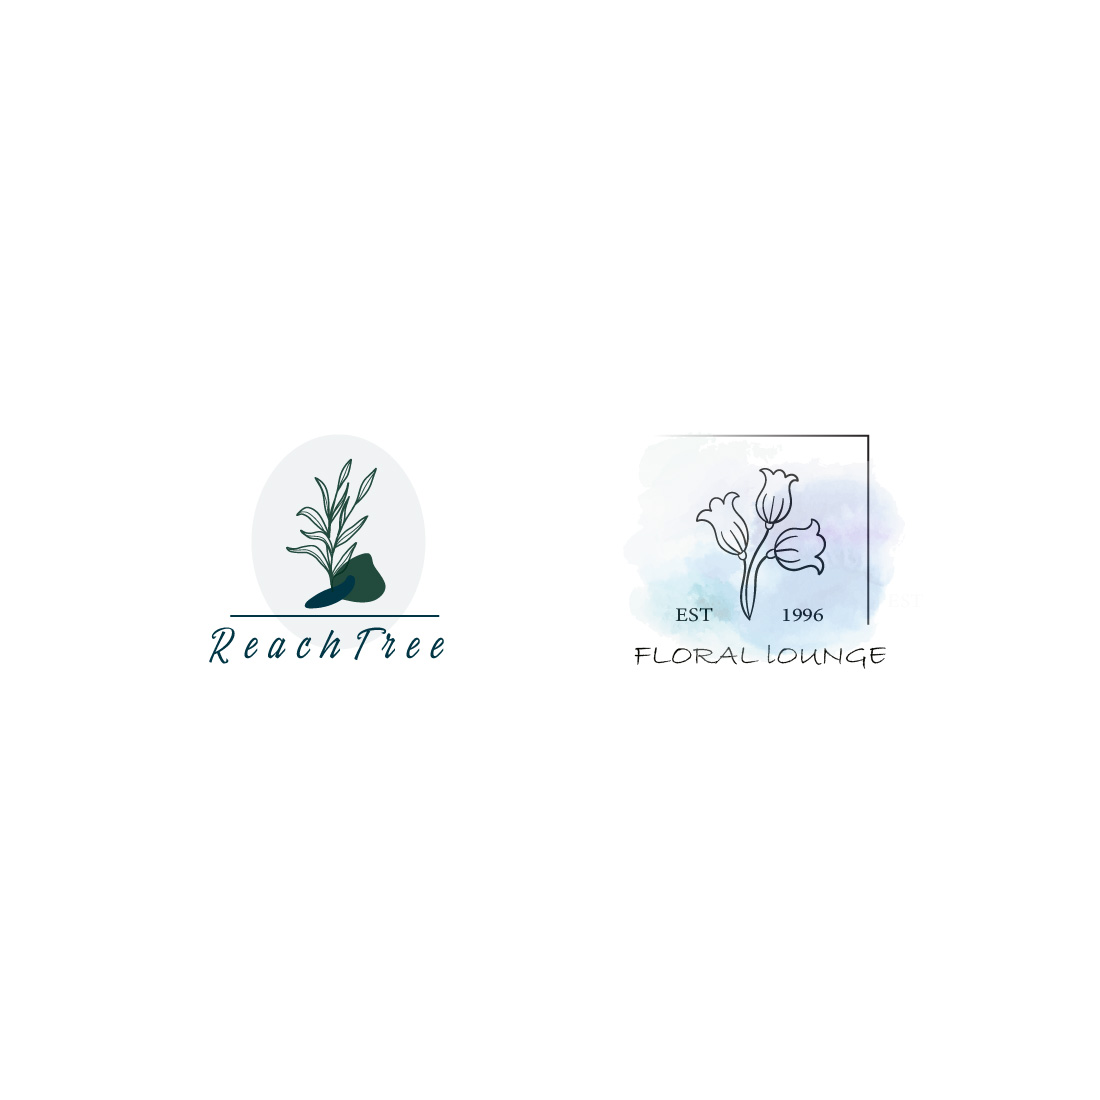 2 Unique Botanical Logos cover image.